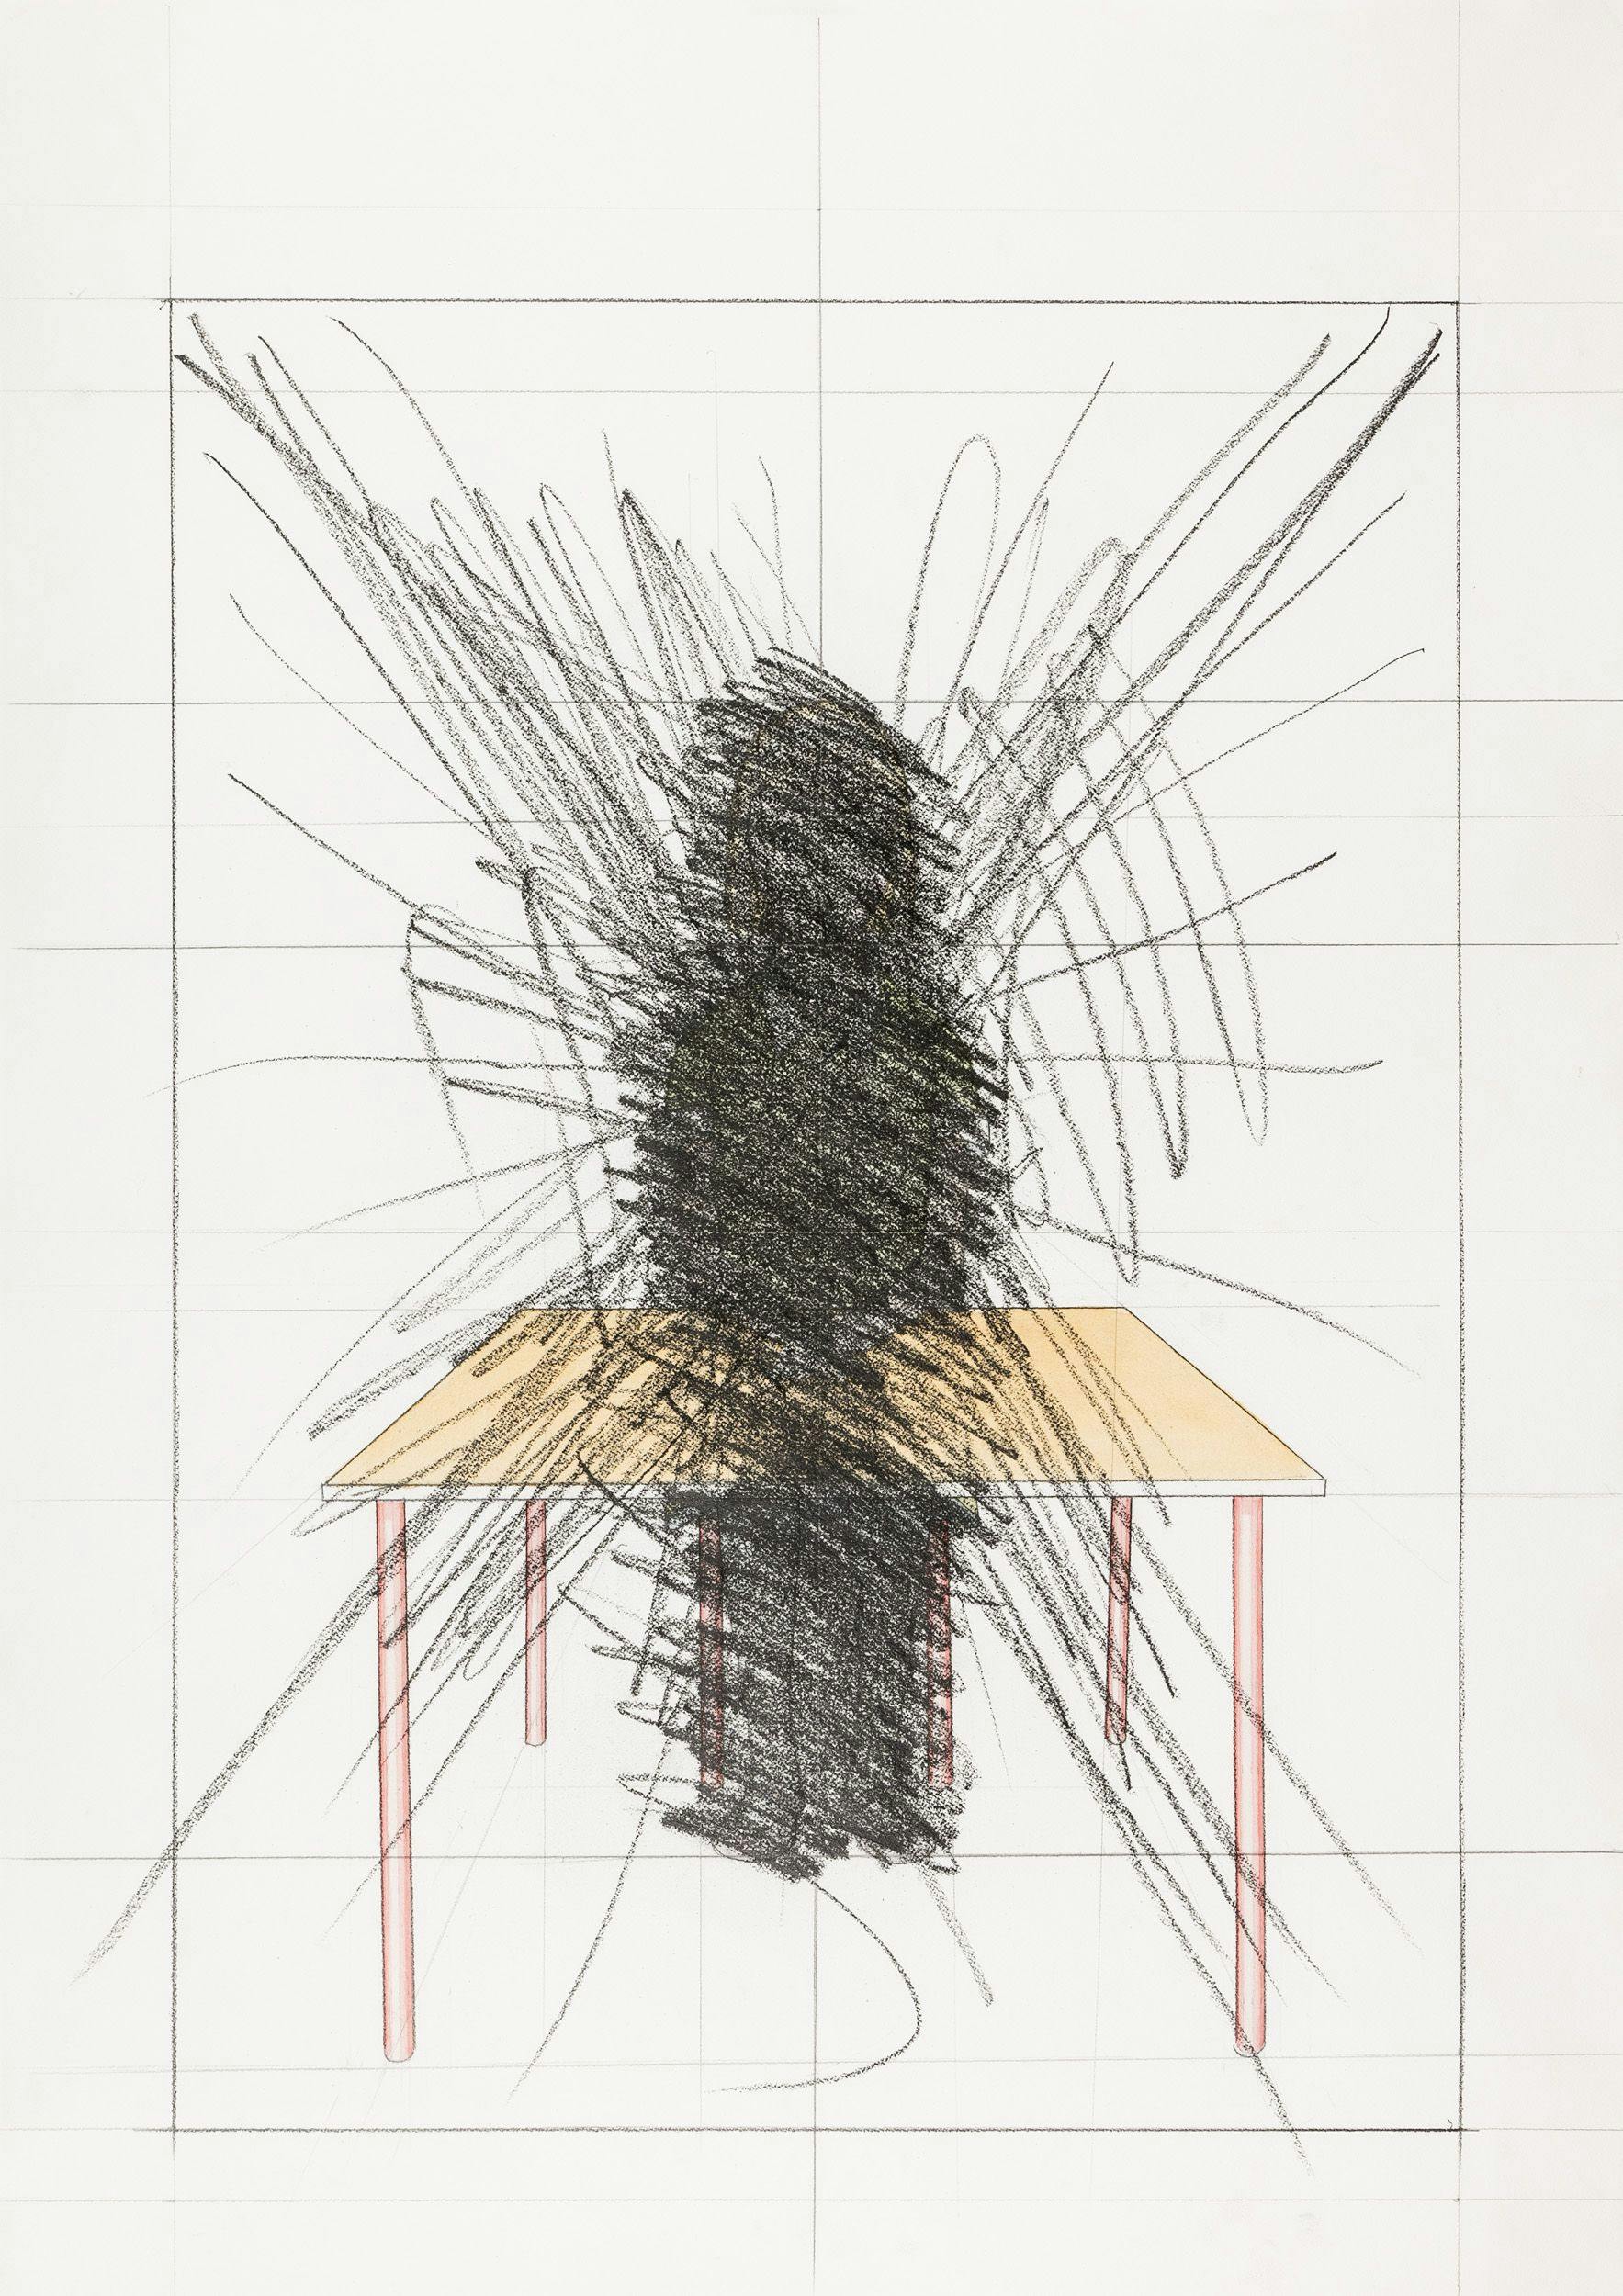 Konstverk: Peter Land, An Attempt to Reconstruct my Primary School Class from Memory (överstruken teckning) work in progress, 2012